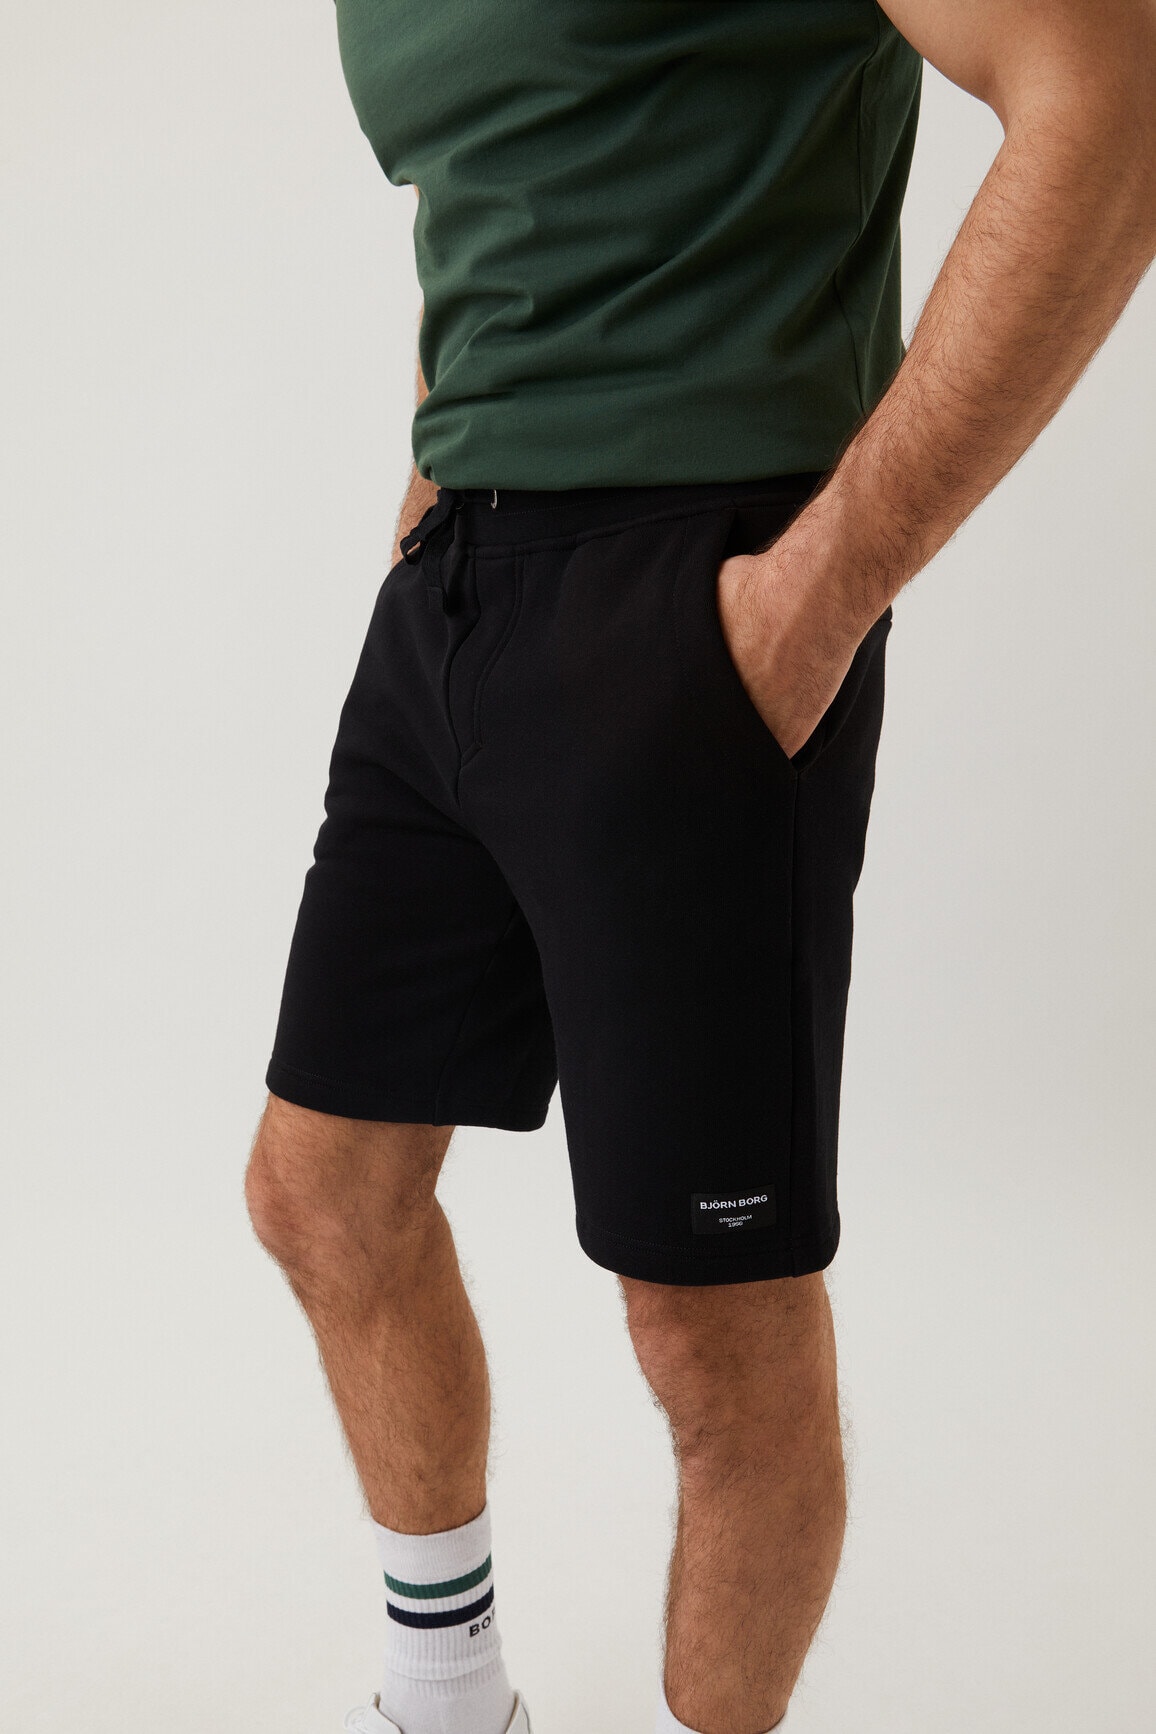 Centre Shorts - Black